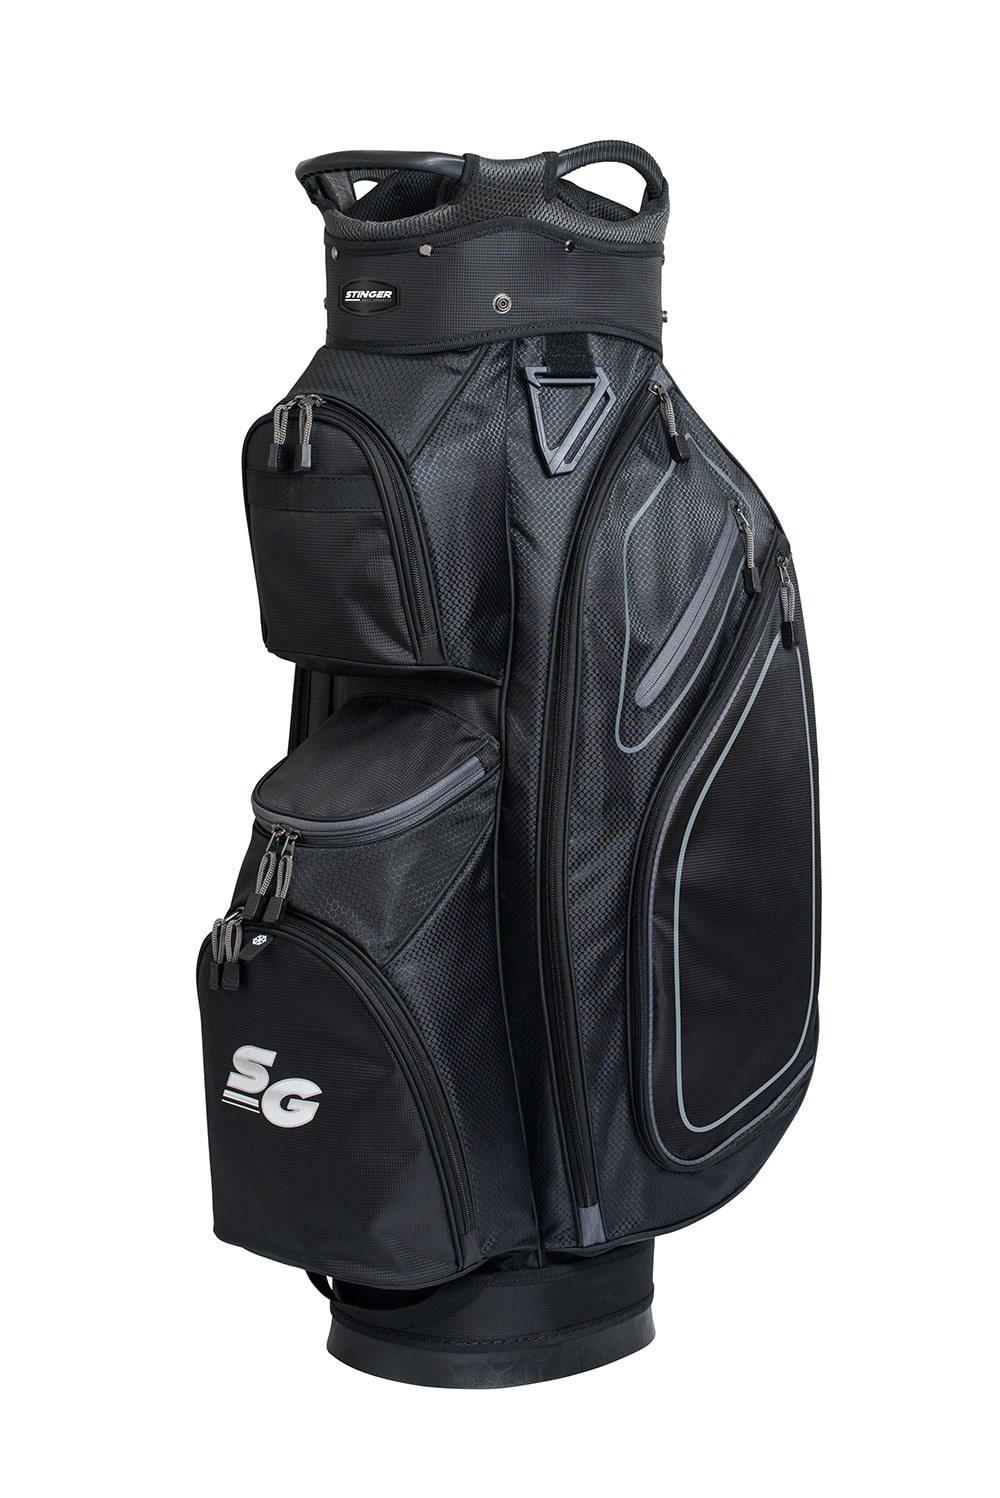 Stinger - Lightweight Golf Black/Grey Autodrive Bag AJM 